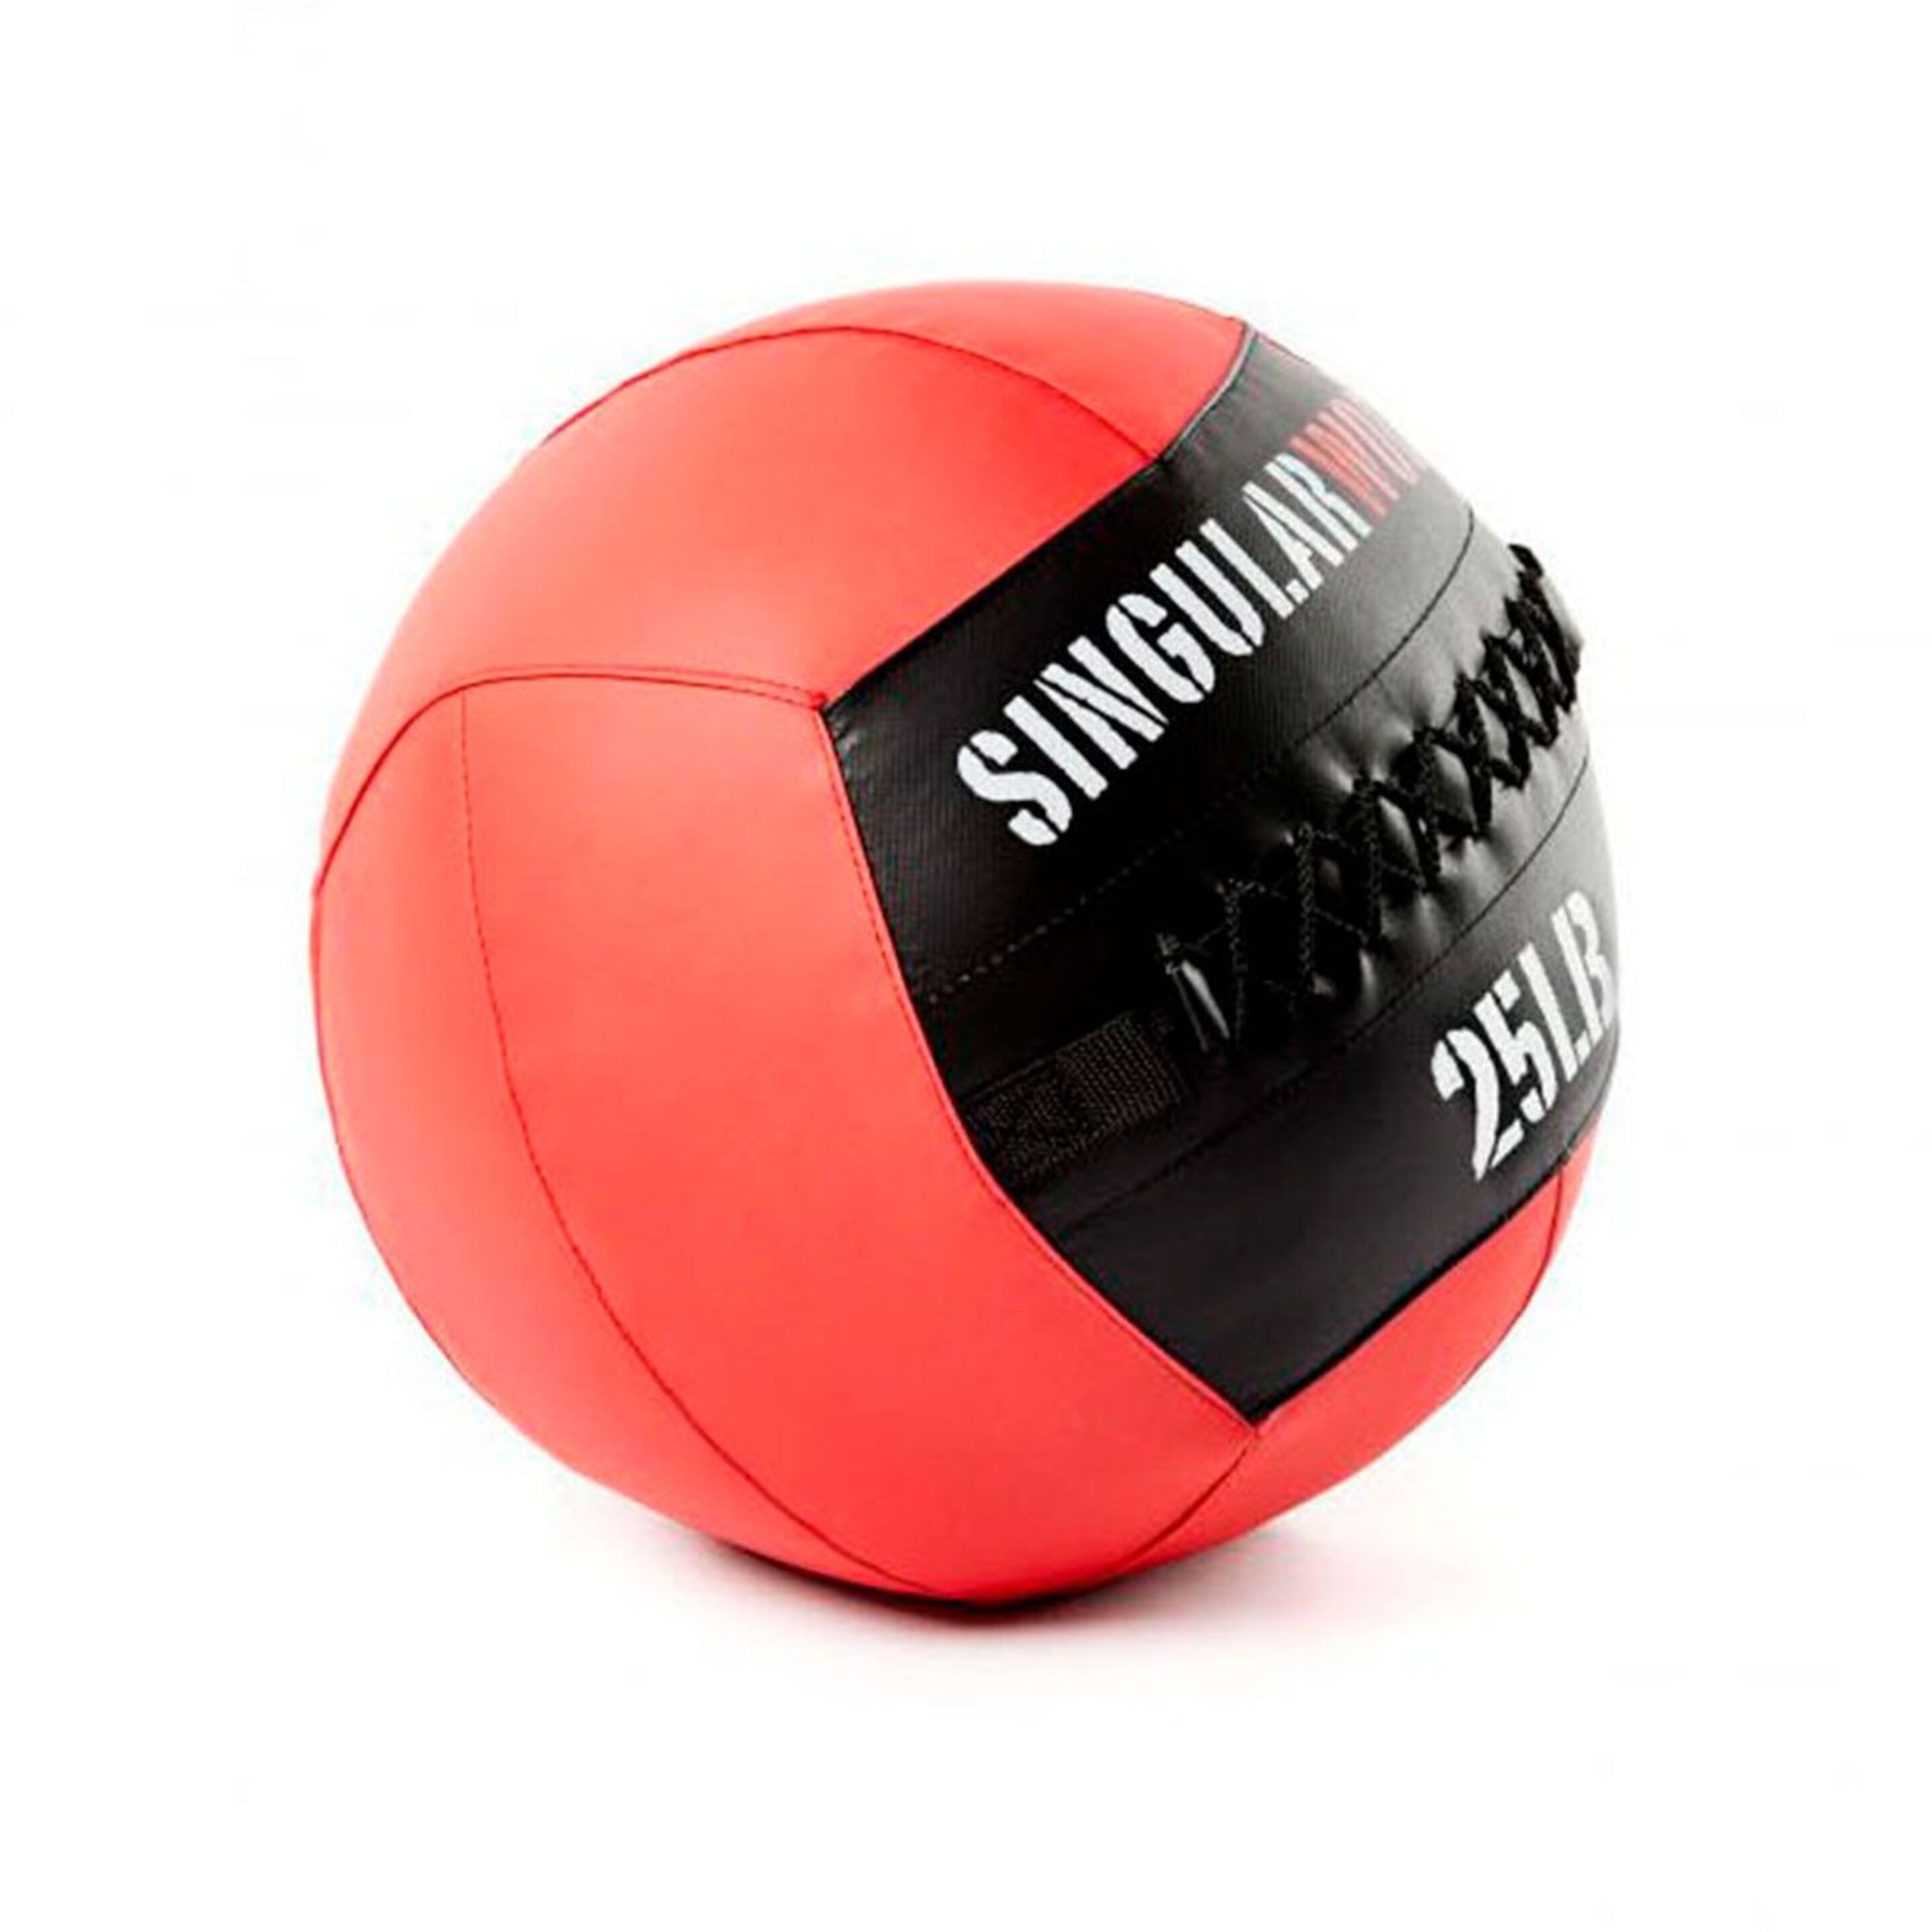 Balón Medicinal élite De 25 Lb (11,34 Kg - 35,5 Cm Diámetro)  Singular Wod - rojo-negro - 